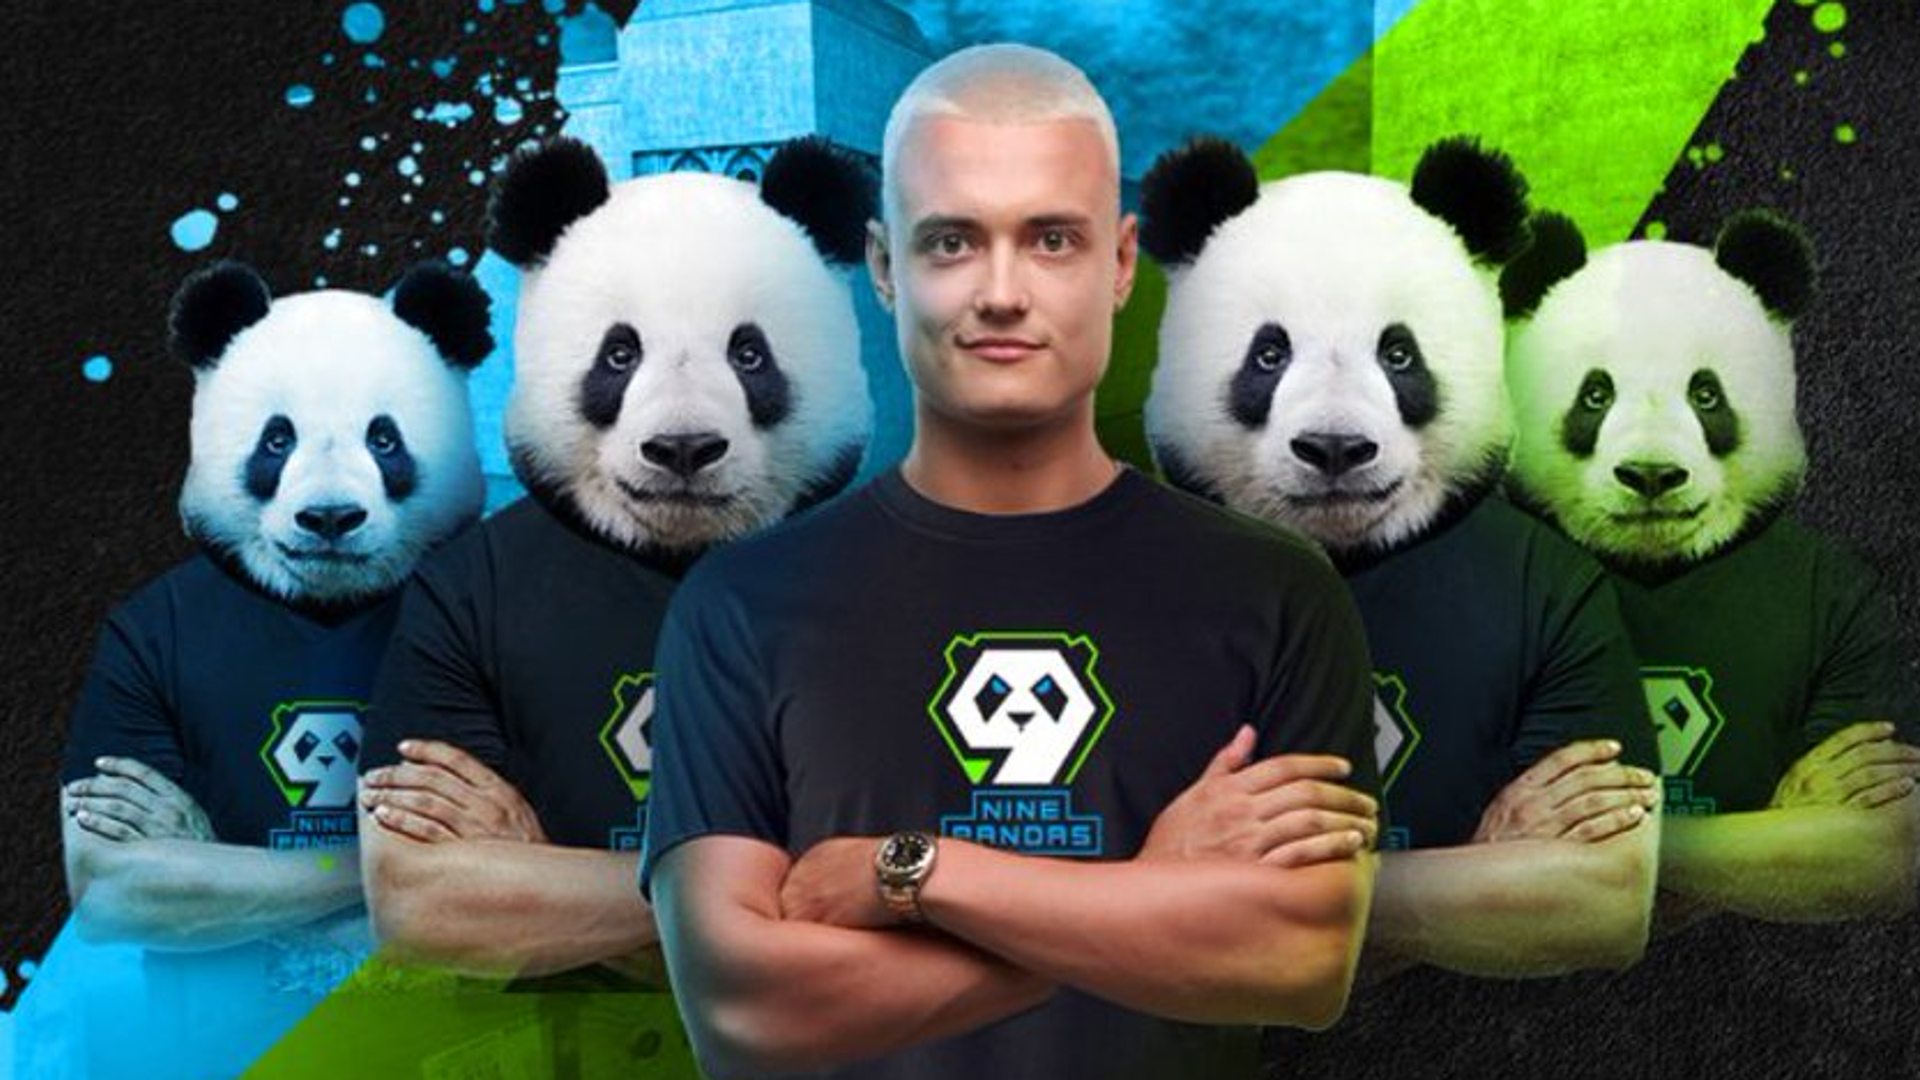 Pandas cs go. 9 Пандас. Seized 9pandas. 9 Pandas CS go. Nine Pandas.